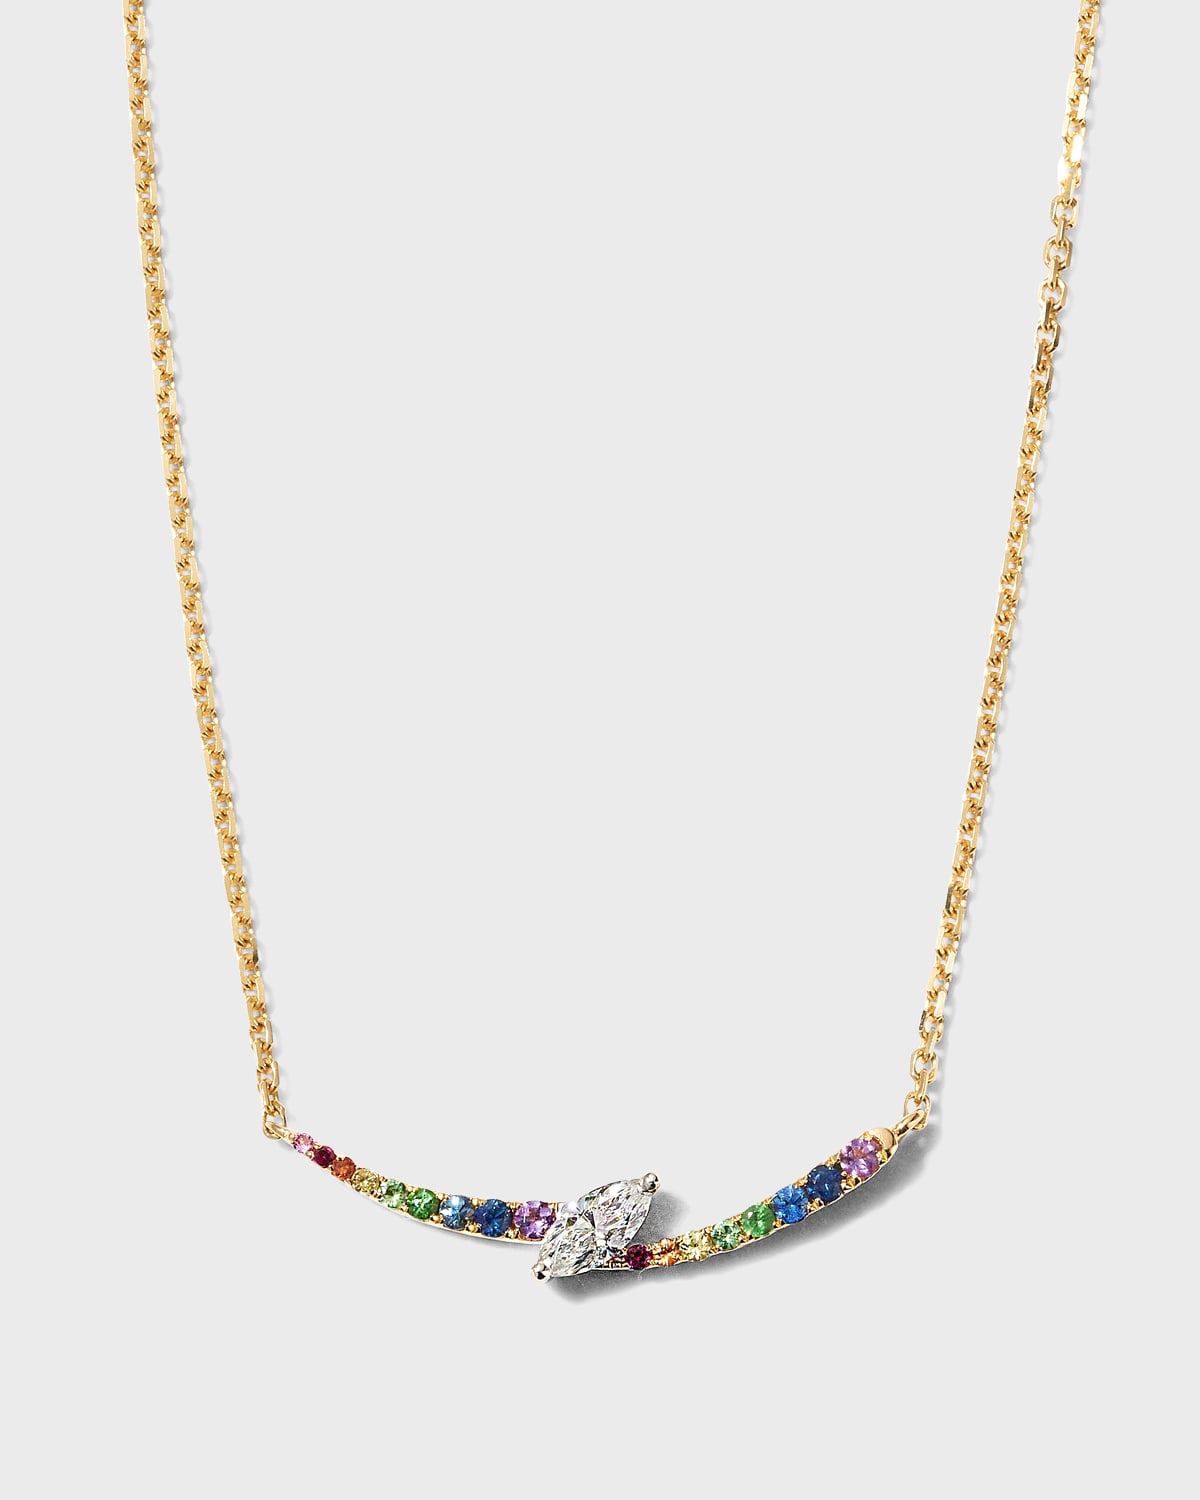 Frederic Sage 18K Yellow Gold Diamond & Gemstone Pendant Necklace